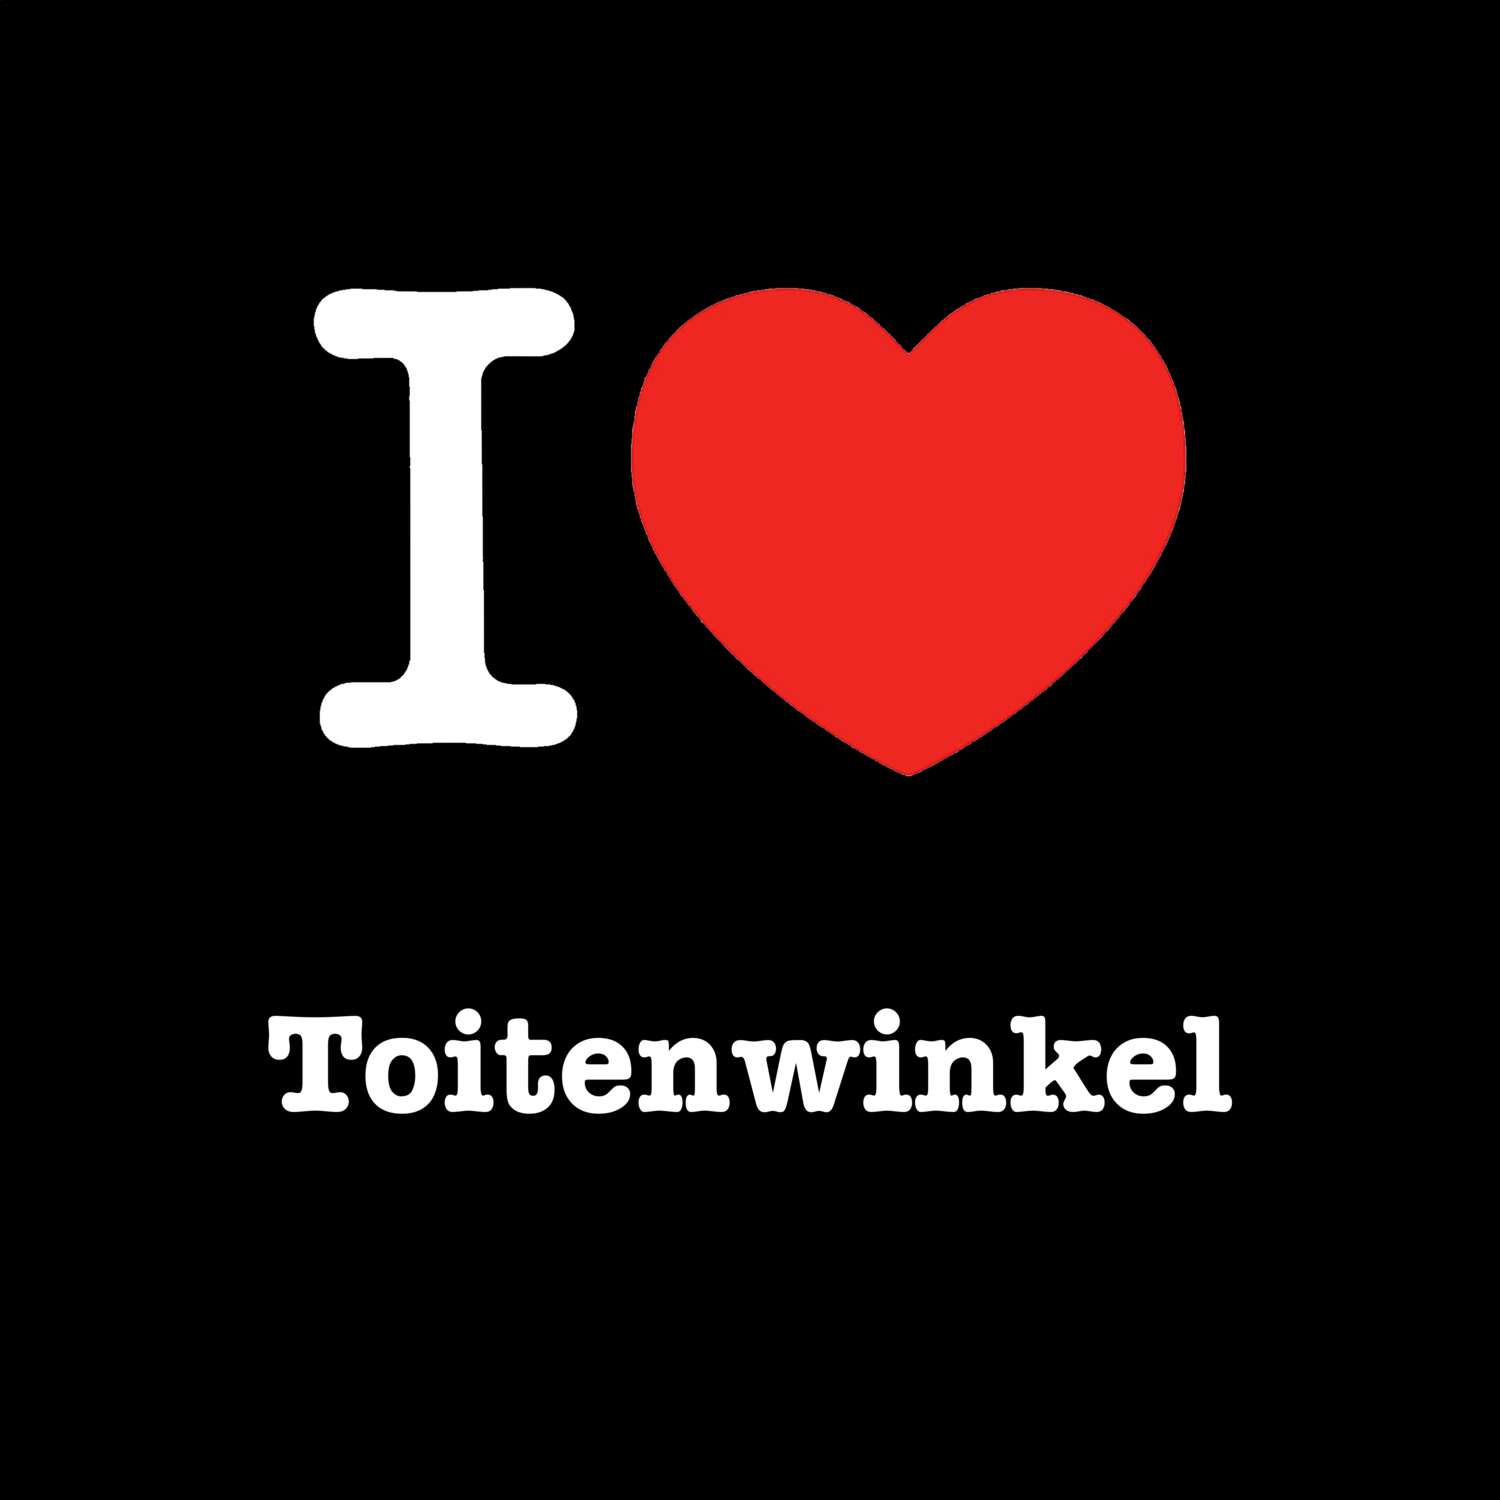 Toitenwinkel T-Shirt »I love«